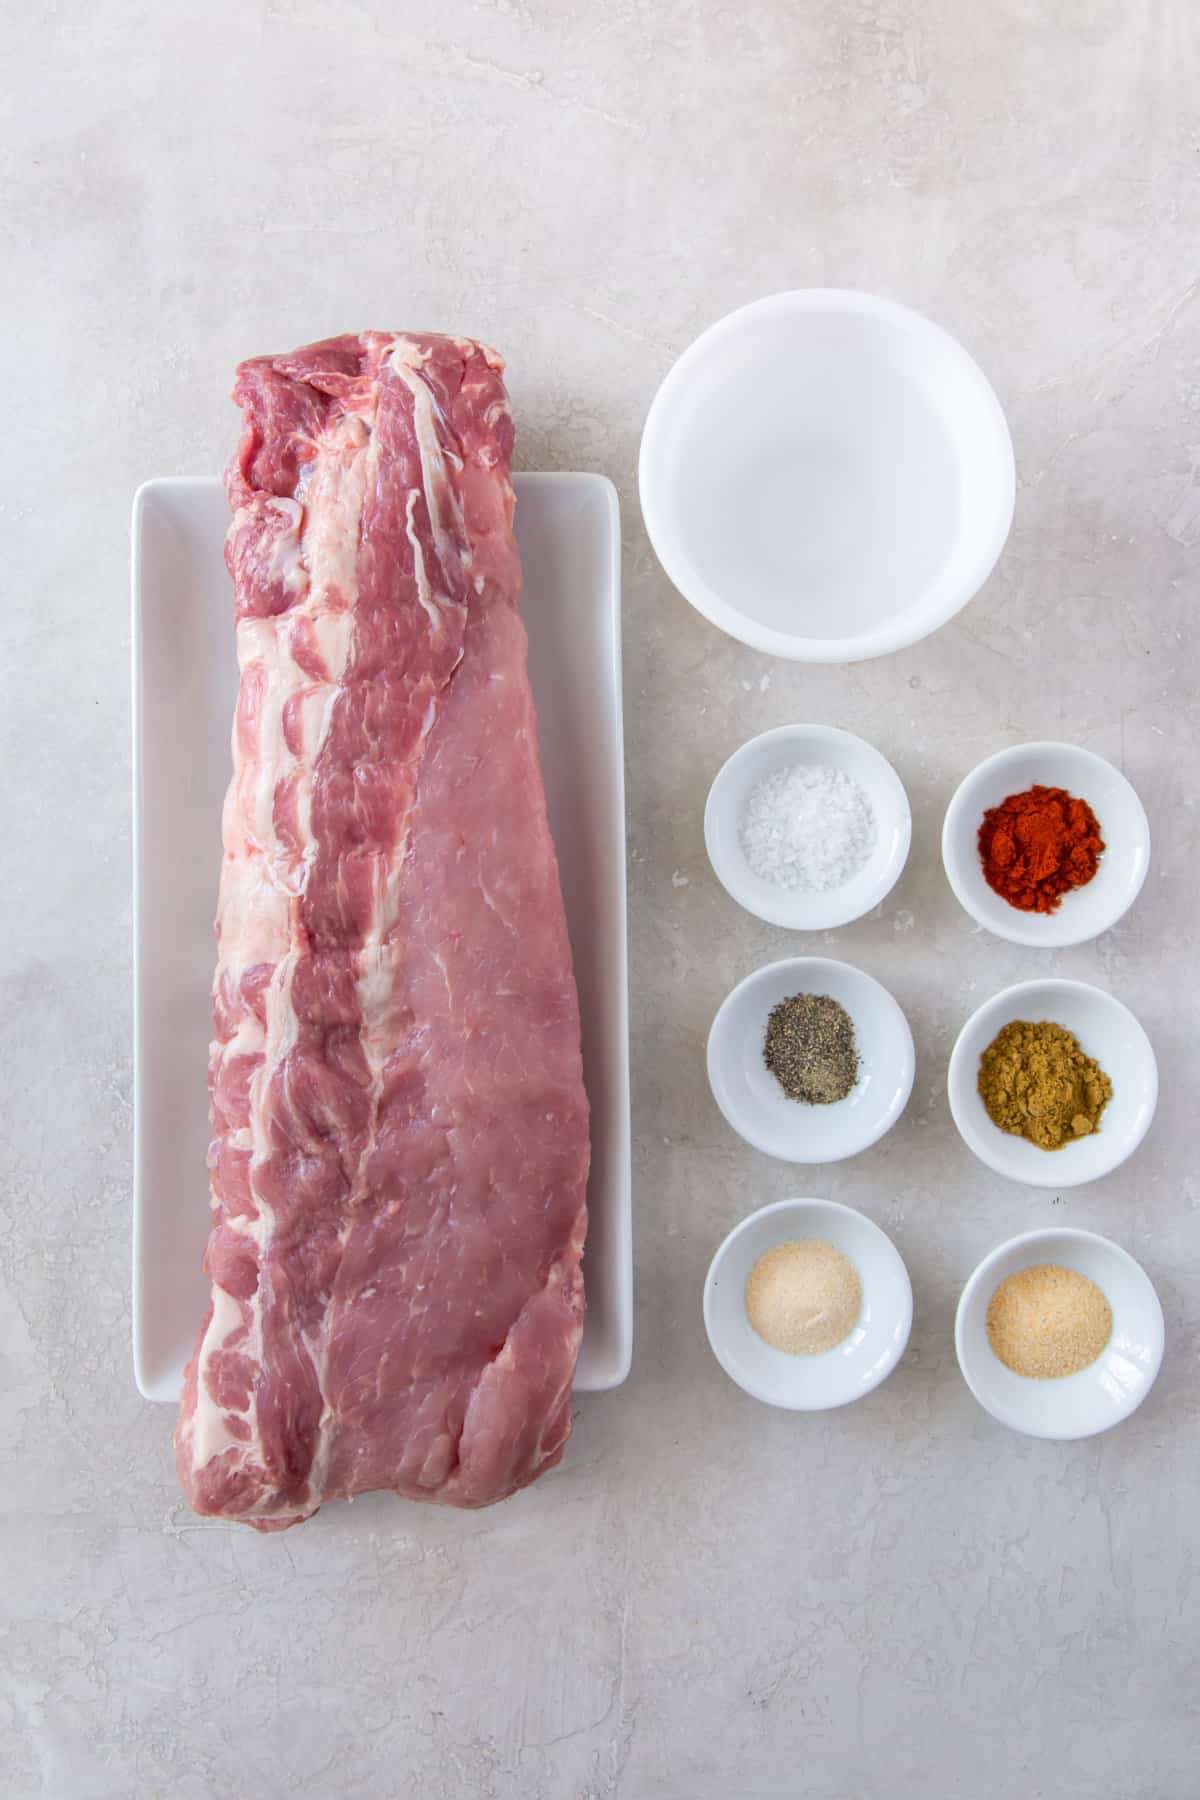 ingredients for making pork ribs.